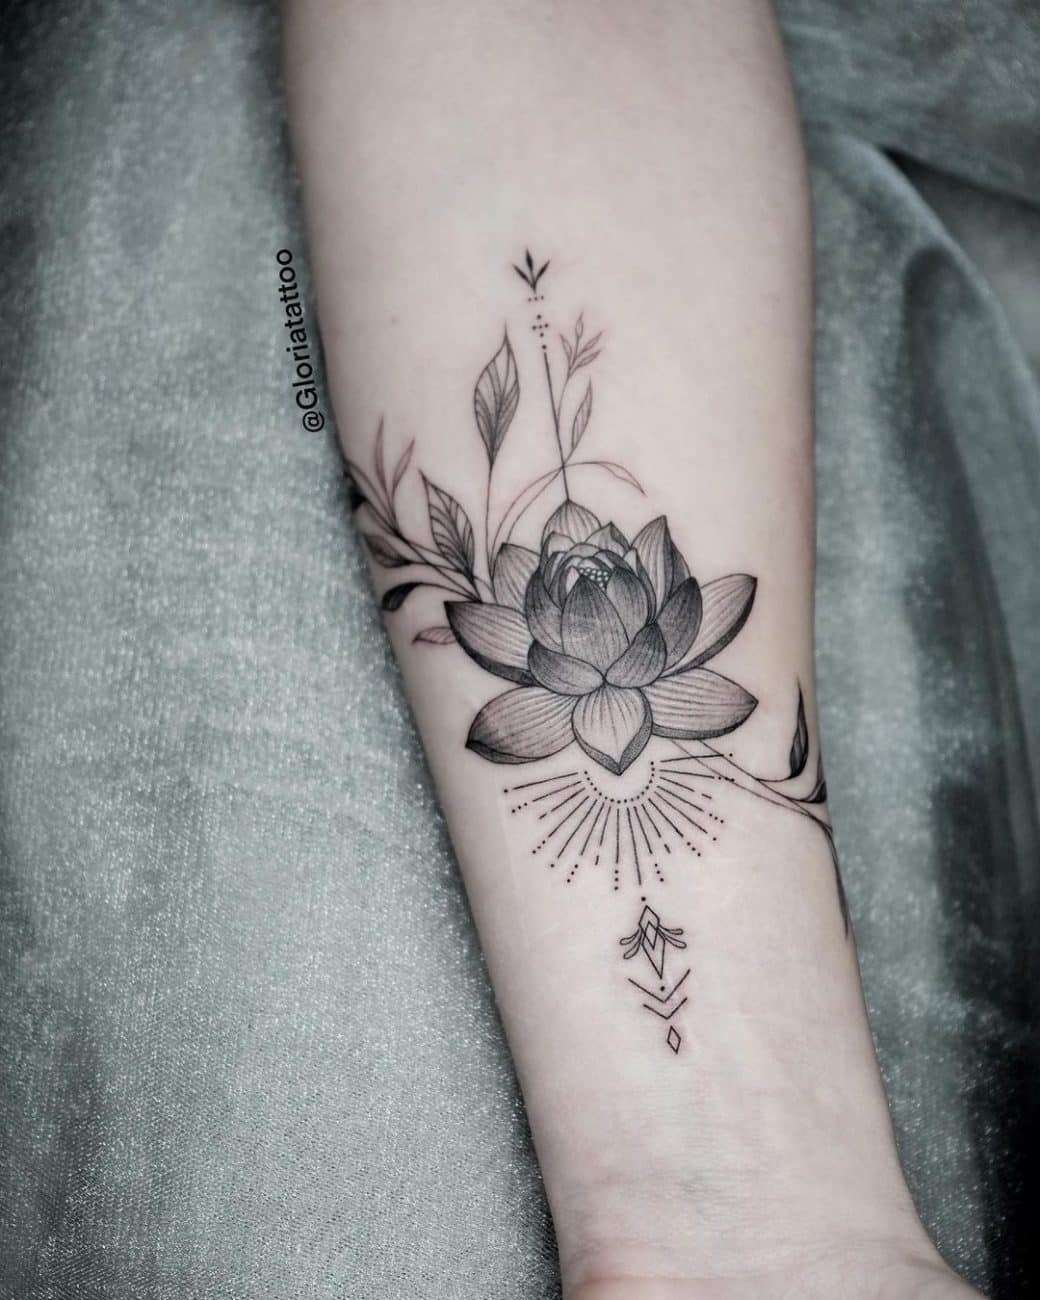 la-tattoo-gloria-zhang-lotus-flower-tattoo